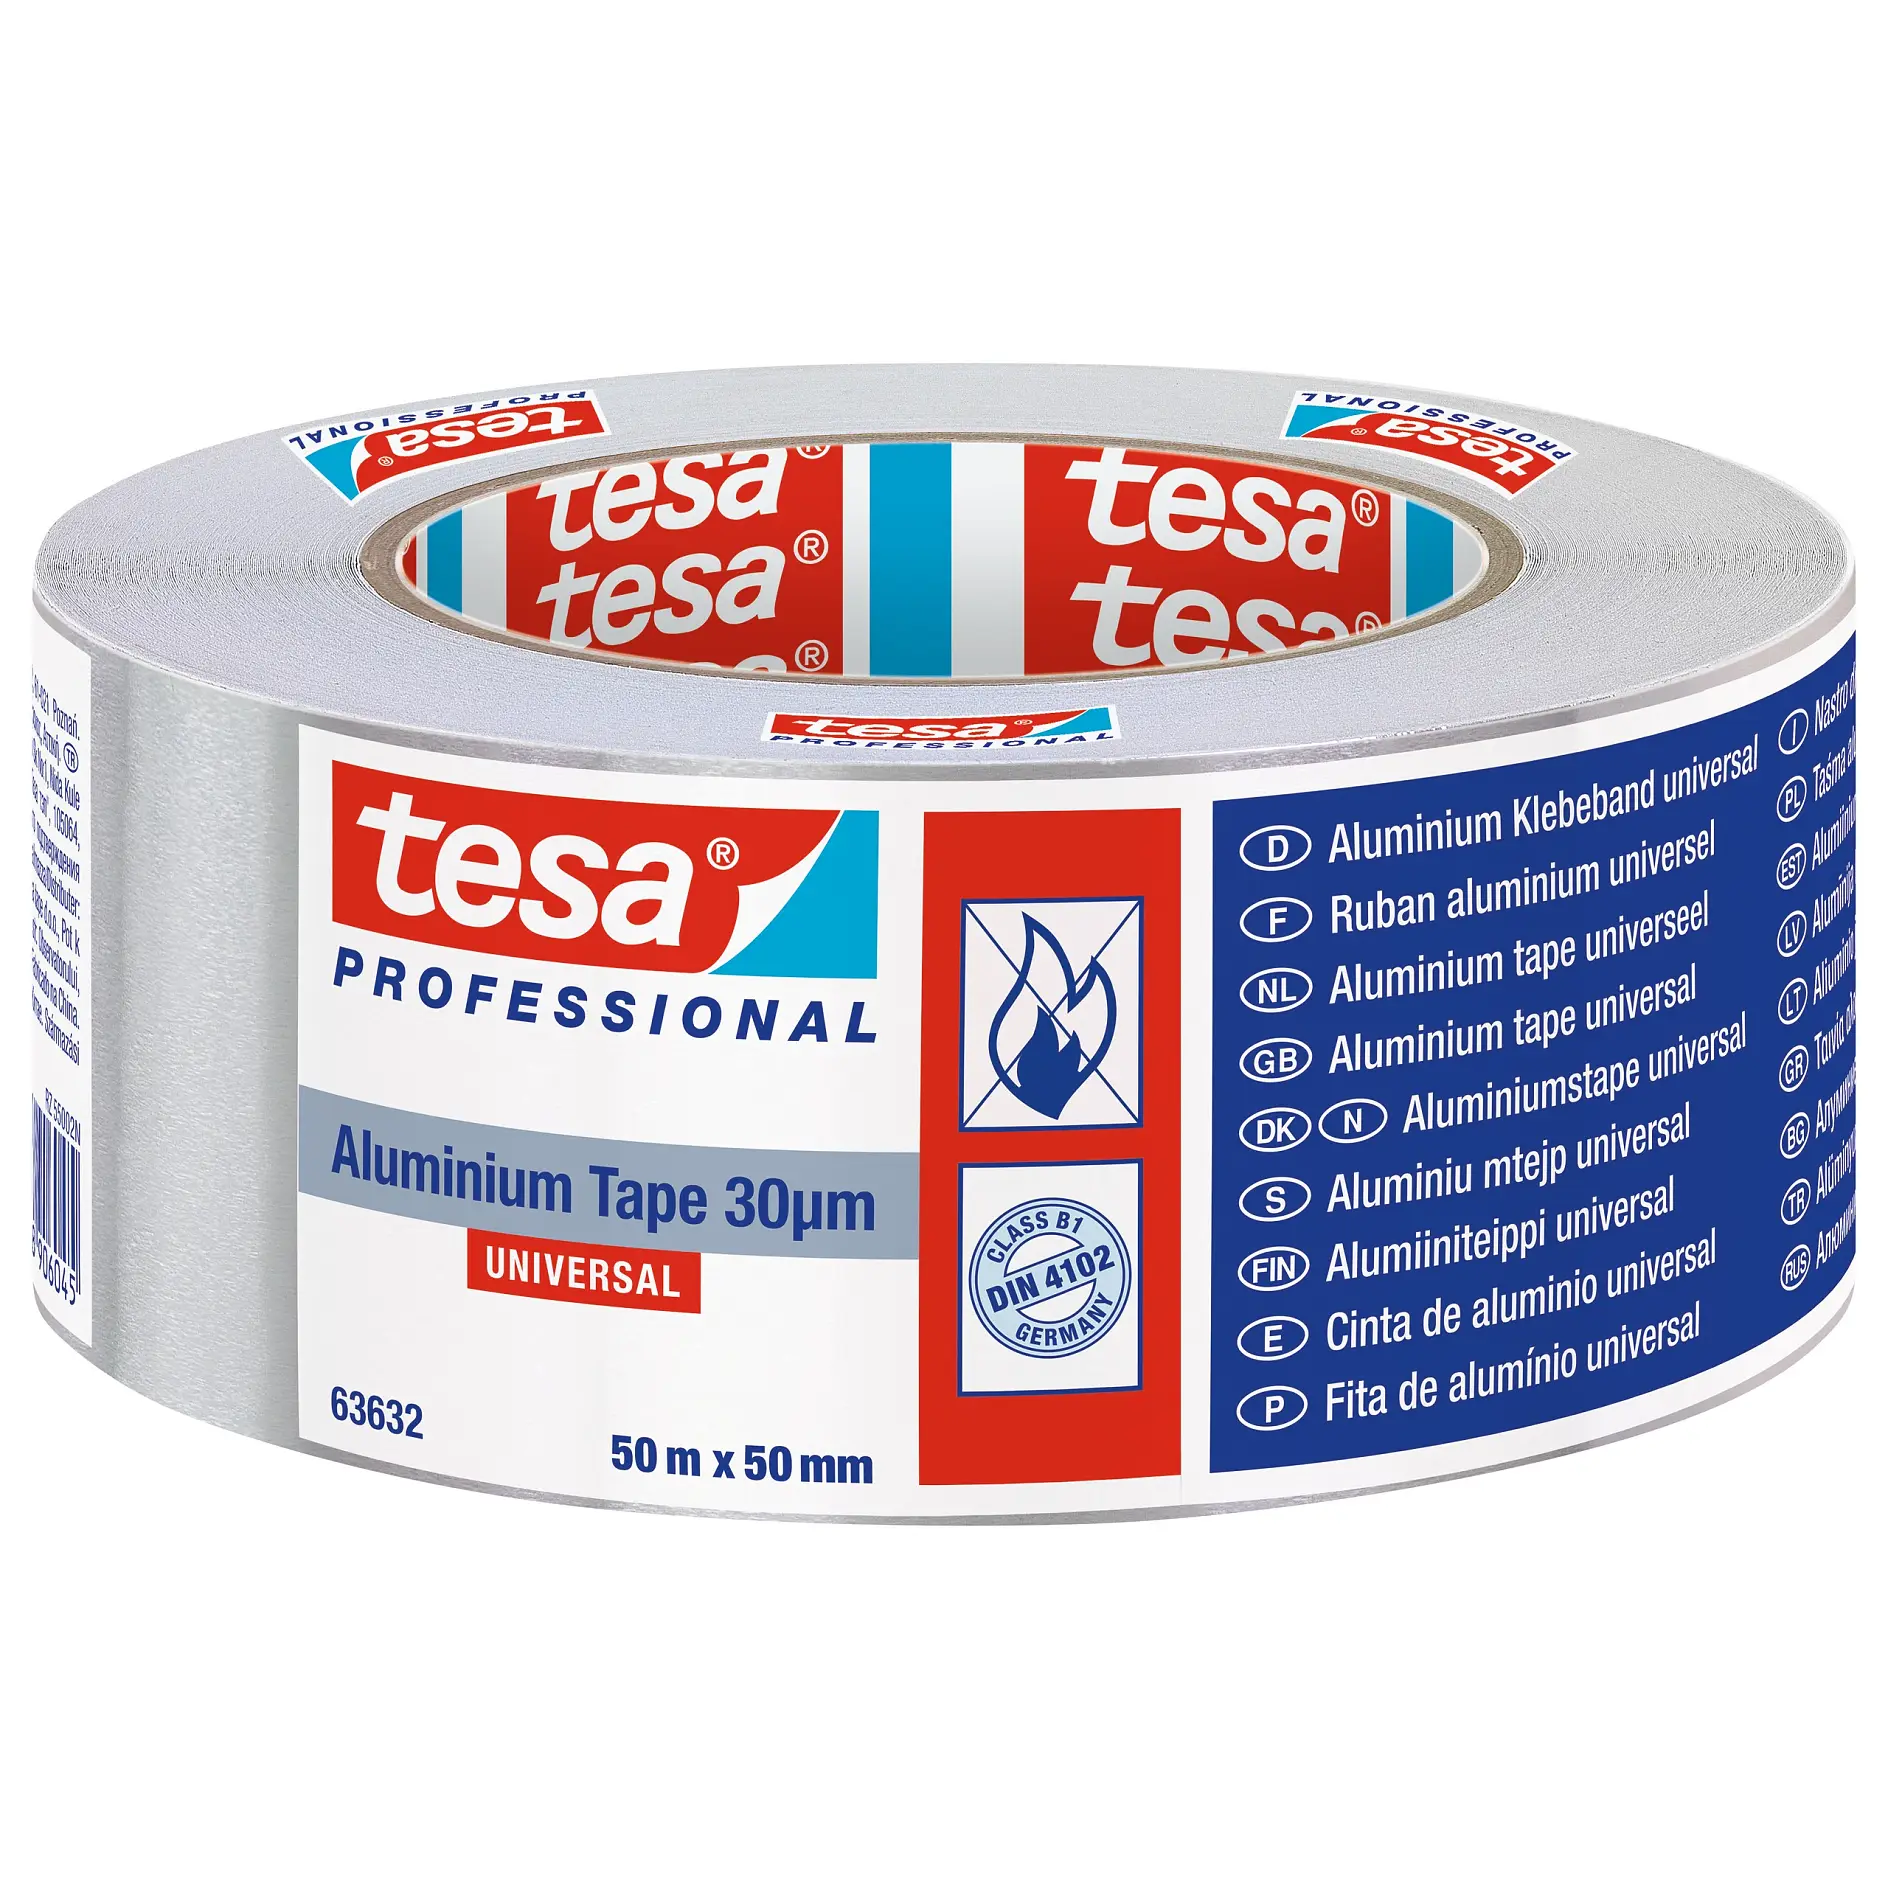 [en-en] tesa Professional Aluminium tape with liner, 50m x 50mm